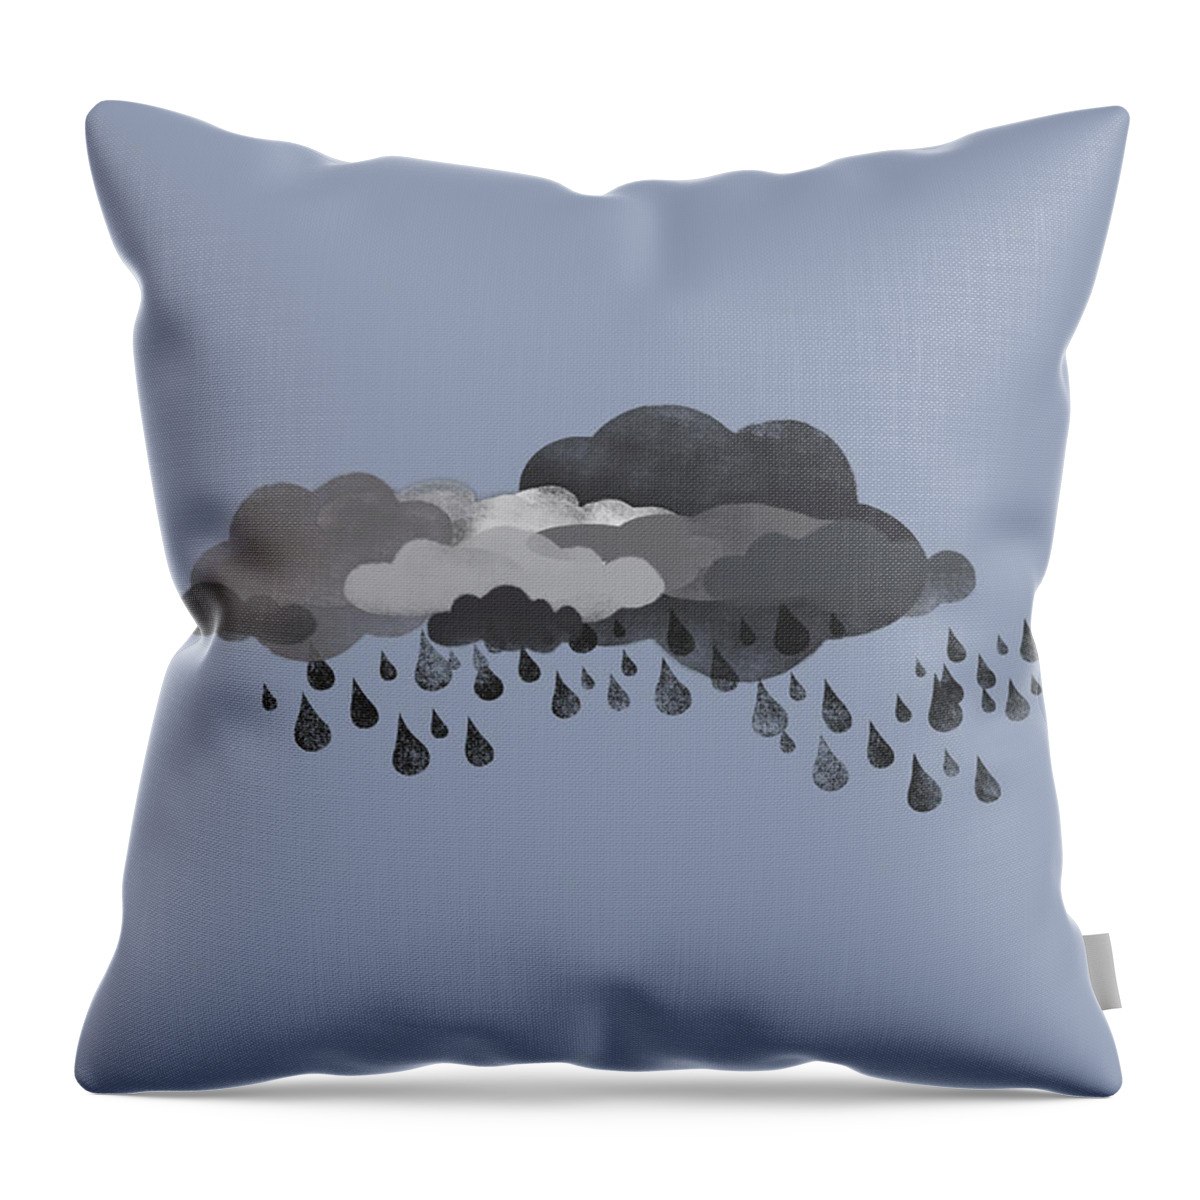 Thunderstorm Throw Pillow featuring the digital art Storm Clouds And Rain by Jutta Kuss